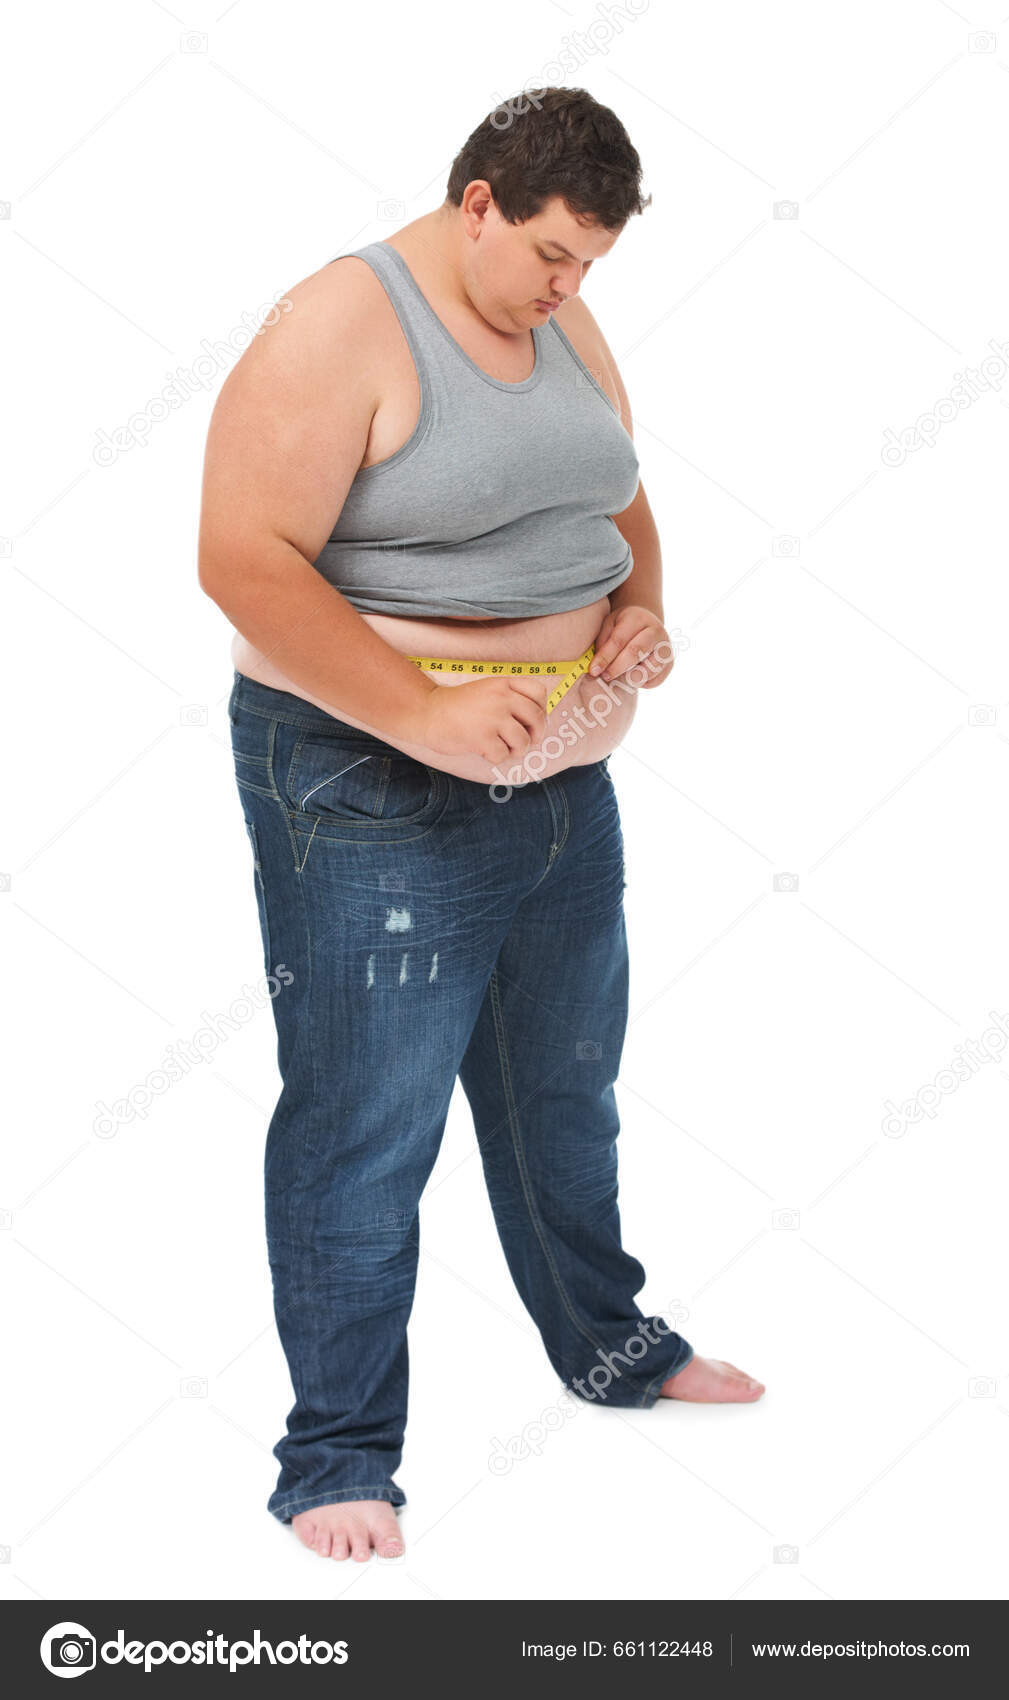 https://st5.depositphotos.com/62628780/66112/i/1600/depositphotos_661122448-stock-photo-obesity-measuring-tape-abdomen-man.jpg